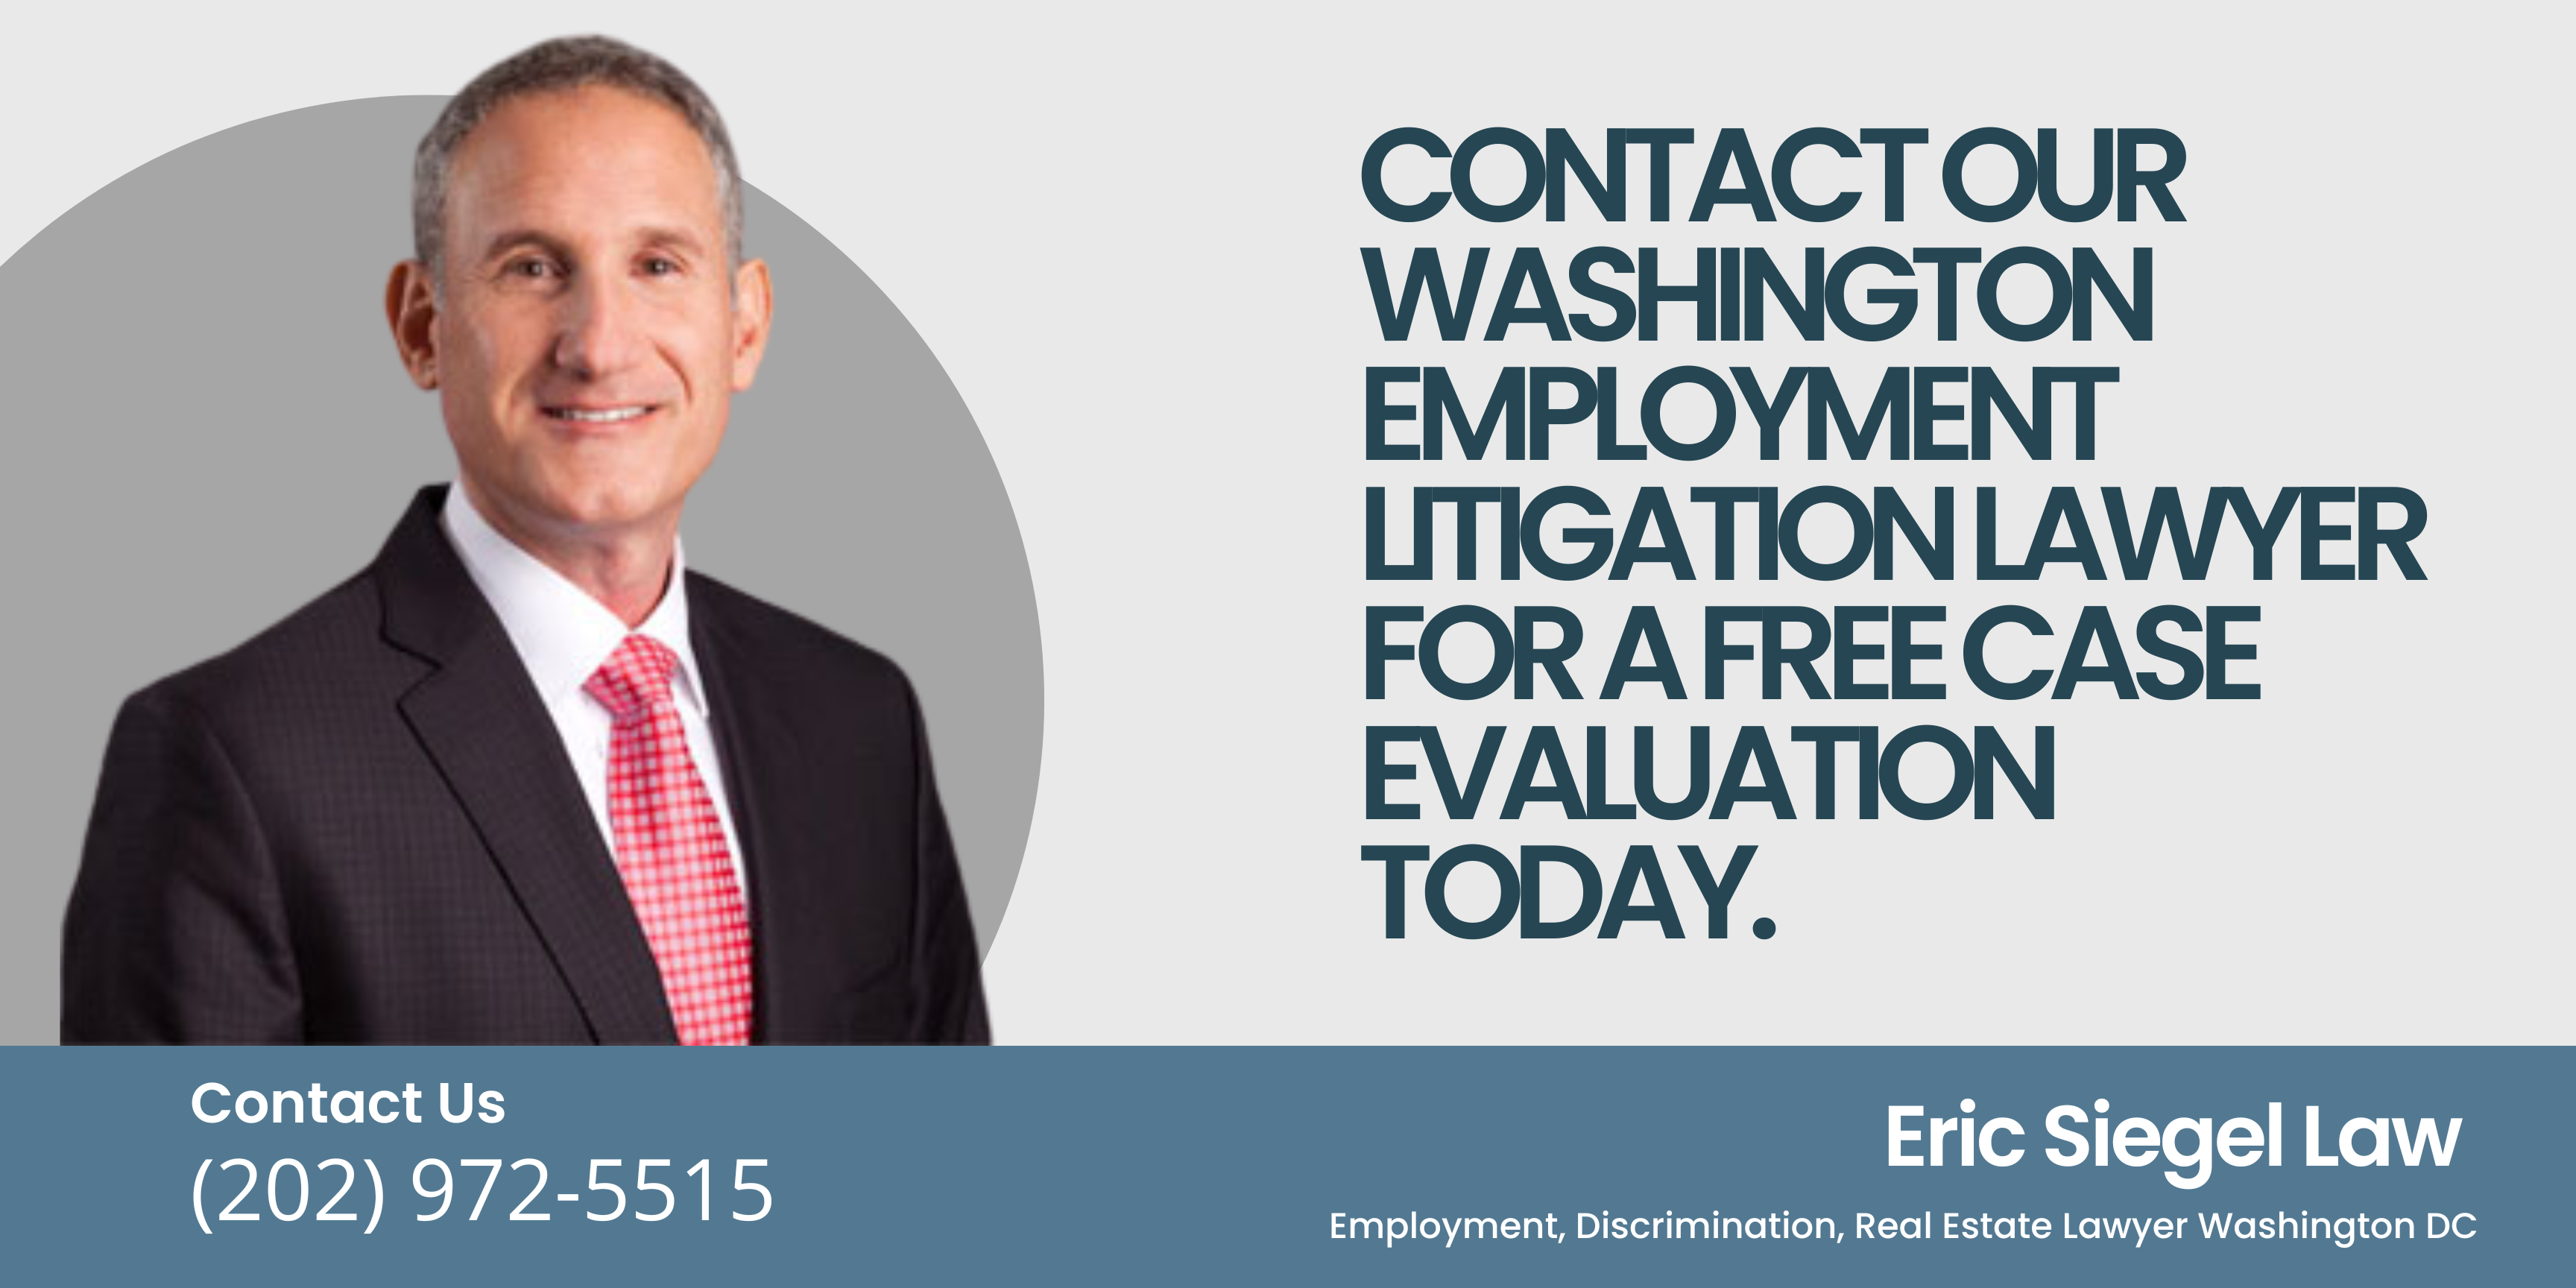 contact our Washington Employment Litigation Lawyer